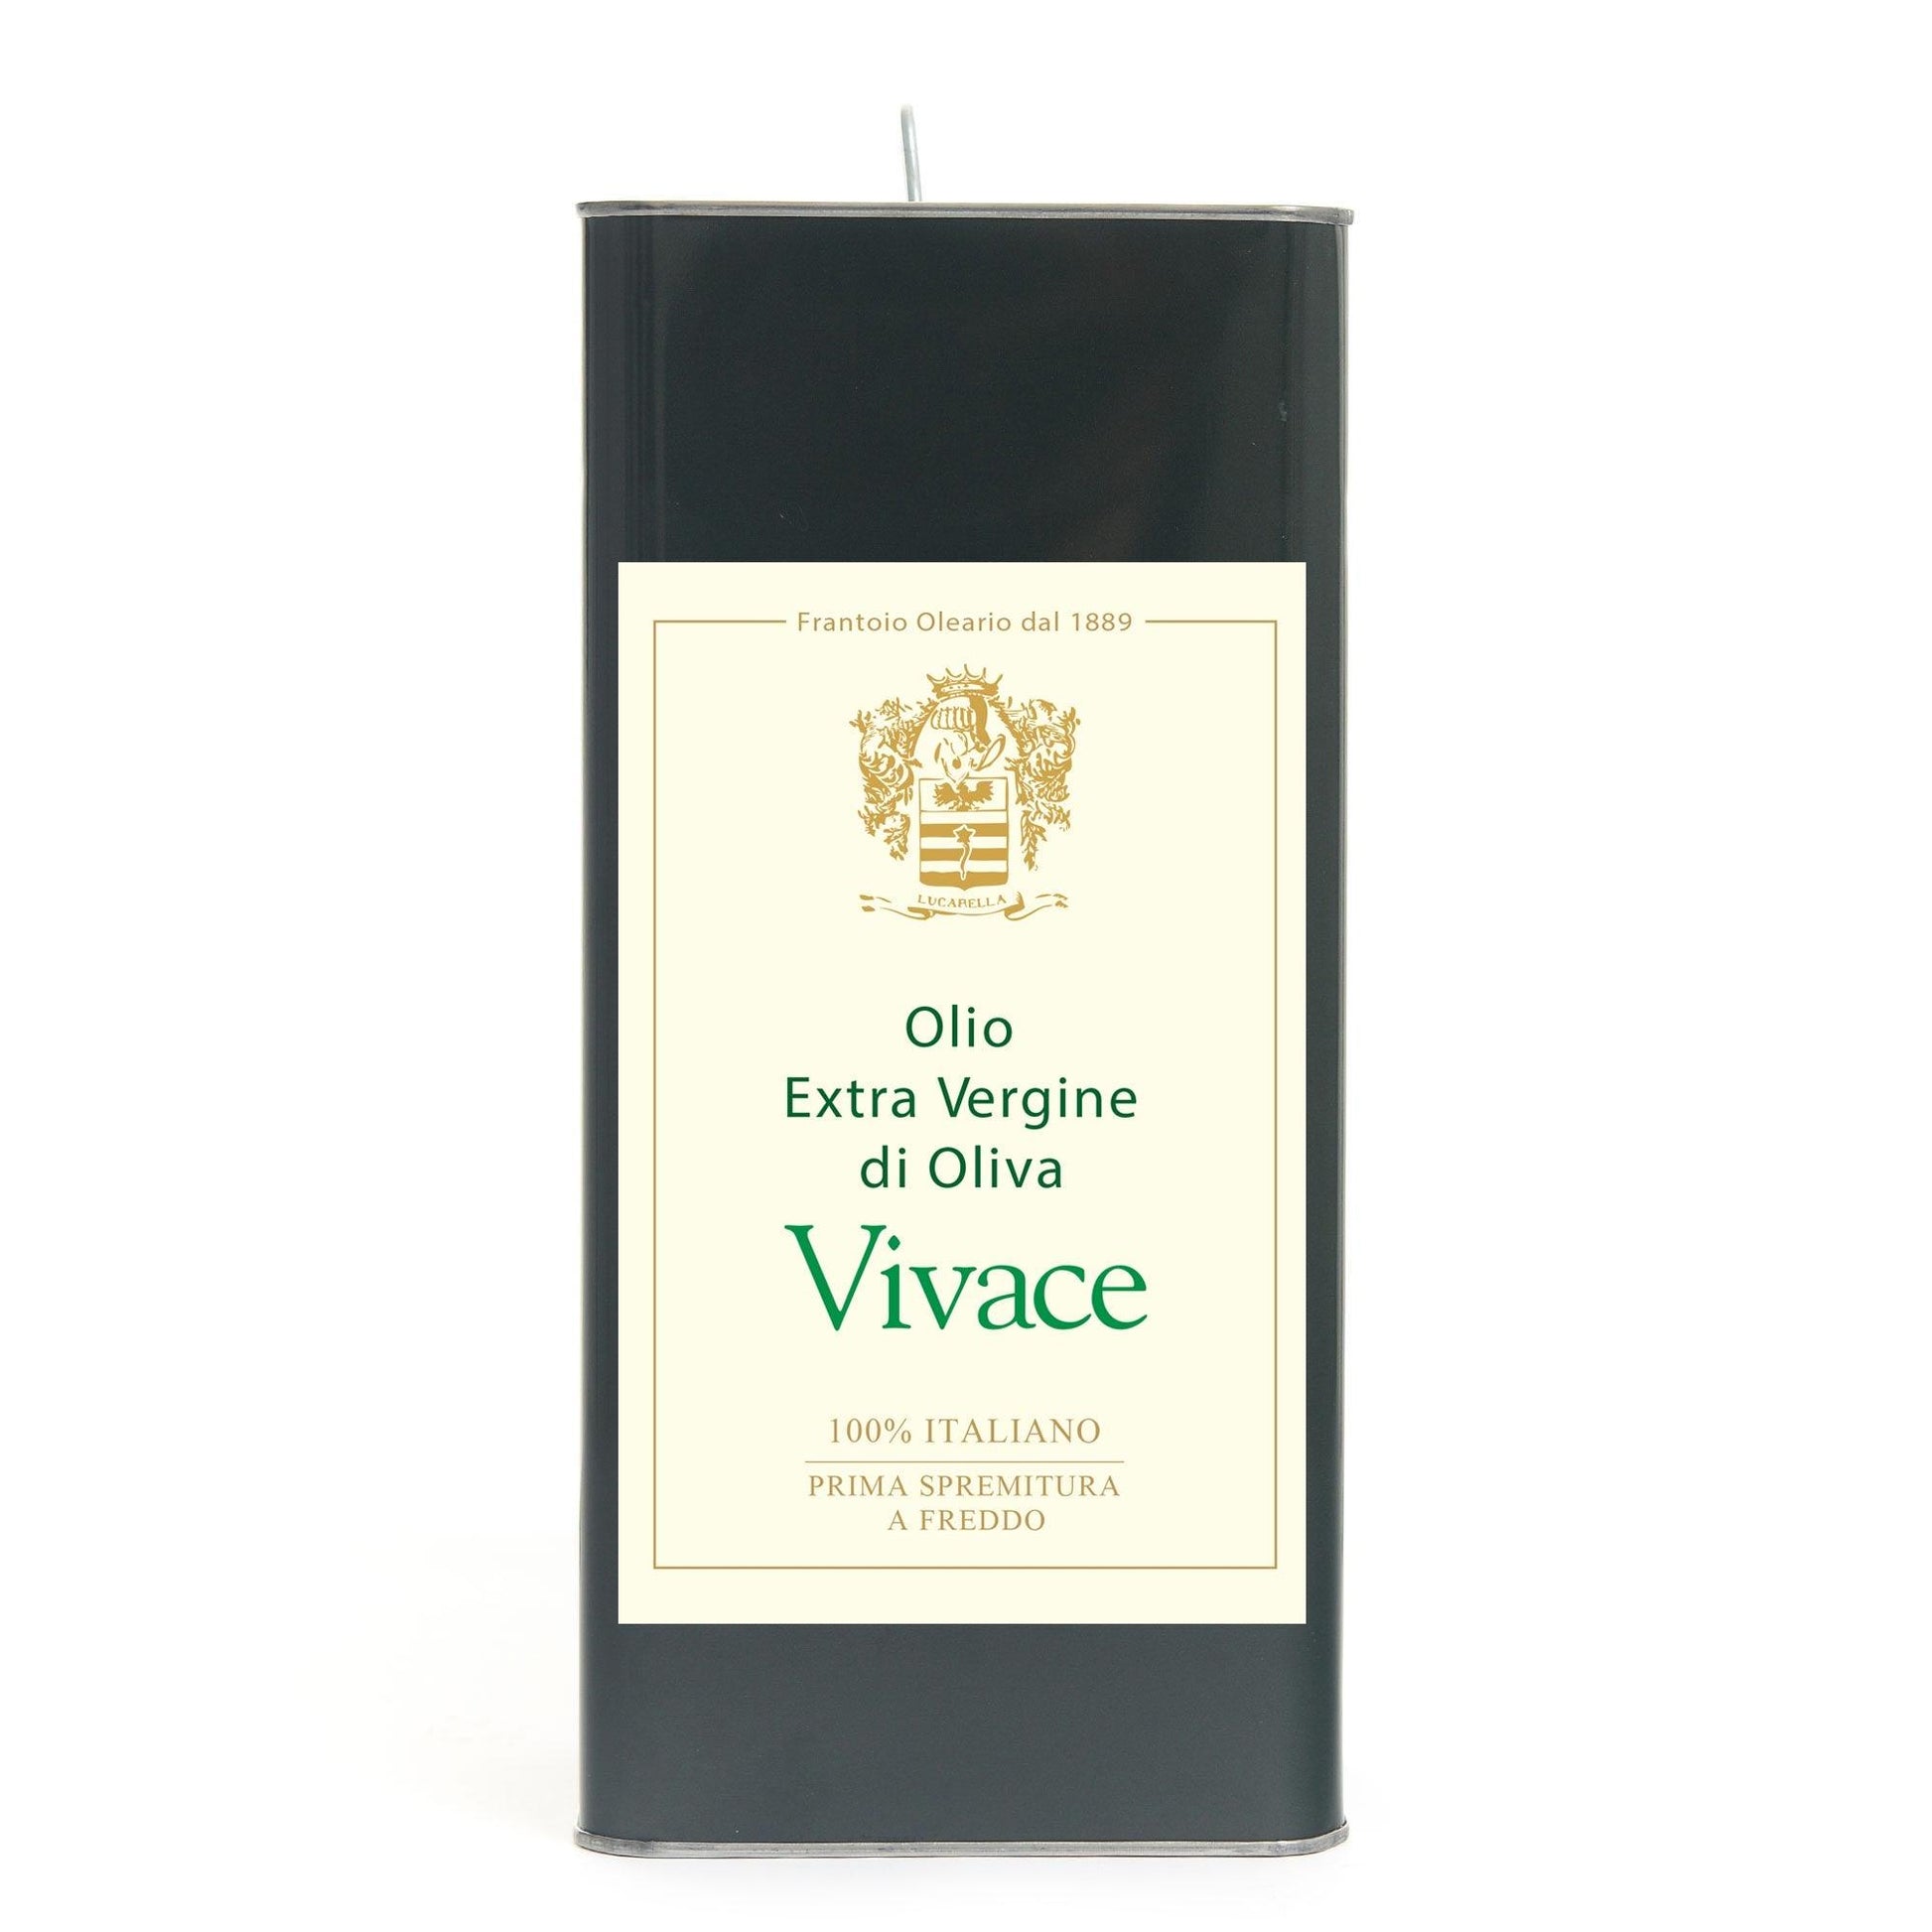 Lattina di Olio extravergine di oliva Vivace da 5 lt - L'Acropoli di Puglia